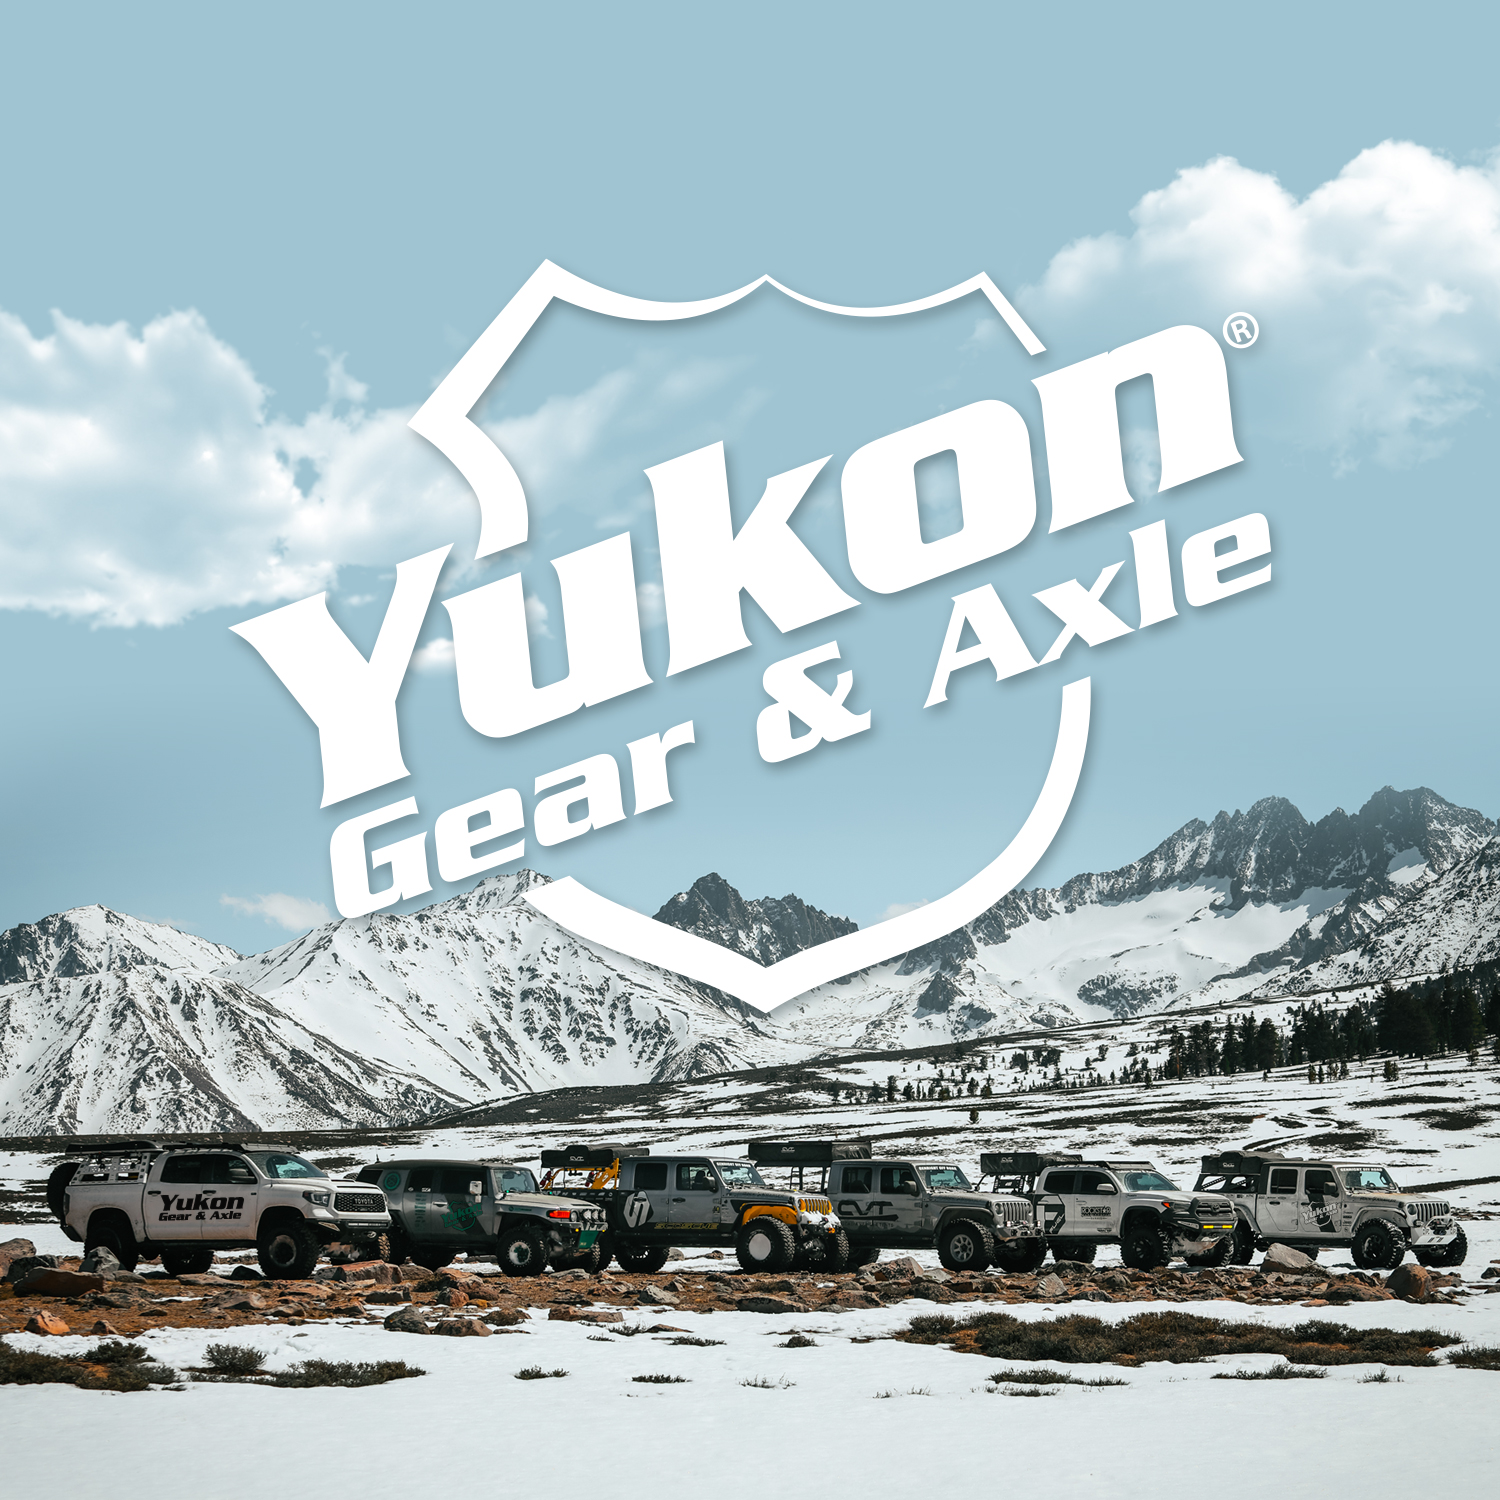 Yukon high performance Ring & Pinion gear set, Chrysler 9.25" front, 4.88 ratio 